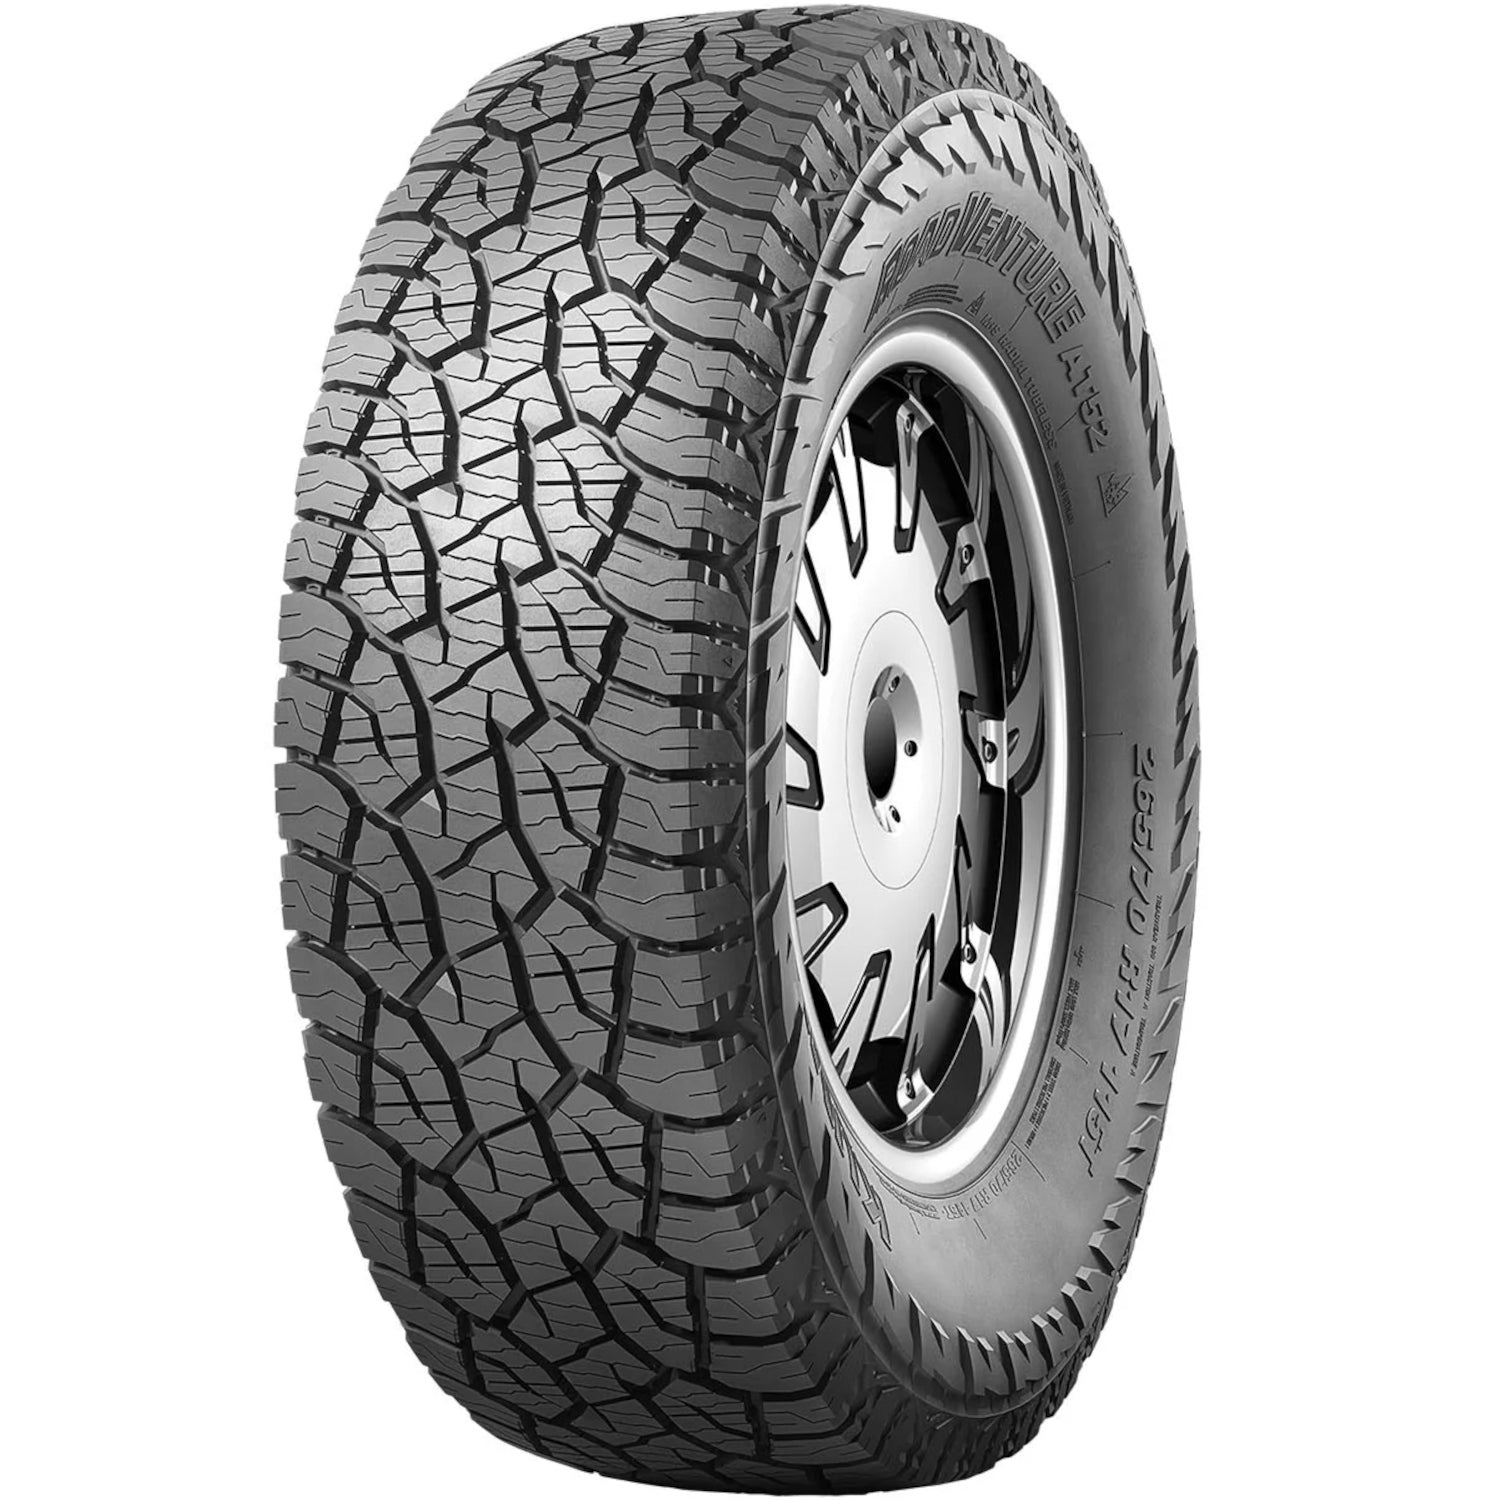 KUMHO ROAD VENTURE AT52 LT245/75R16 (30.5X9.7R 16) Tires